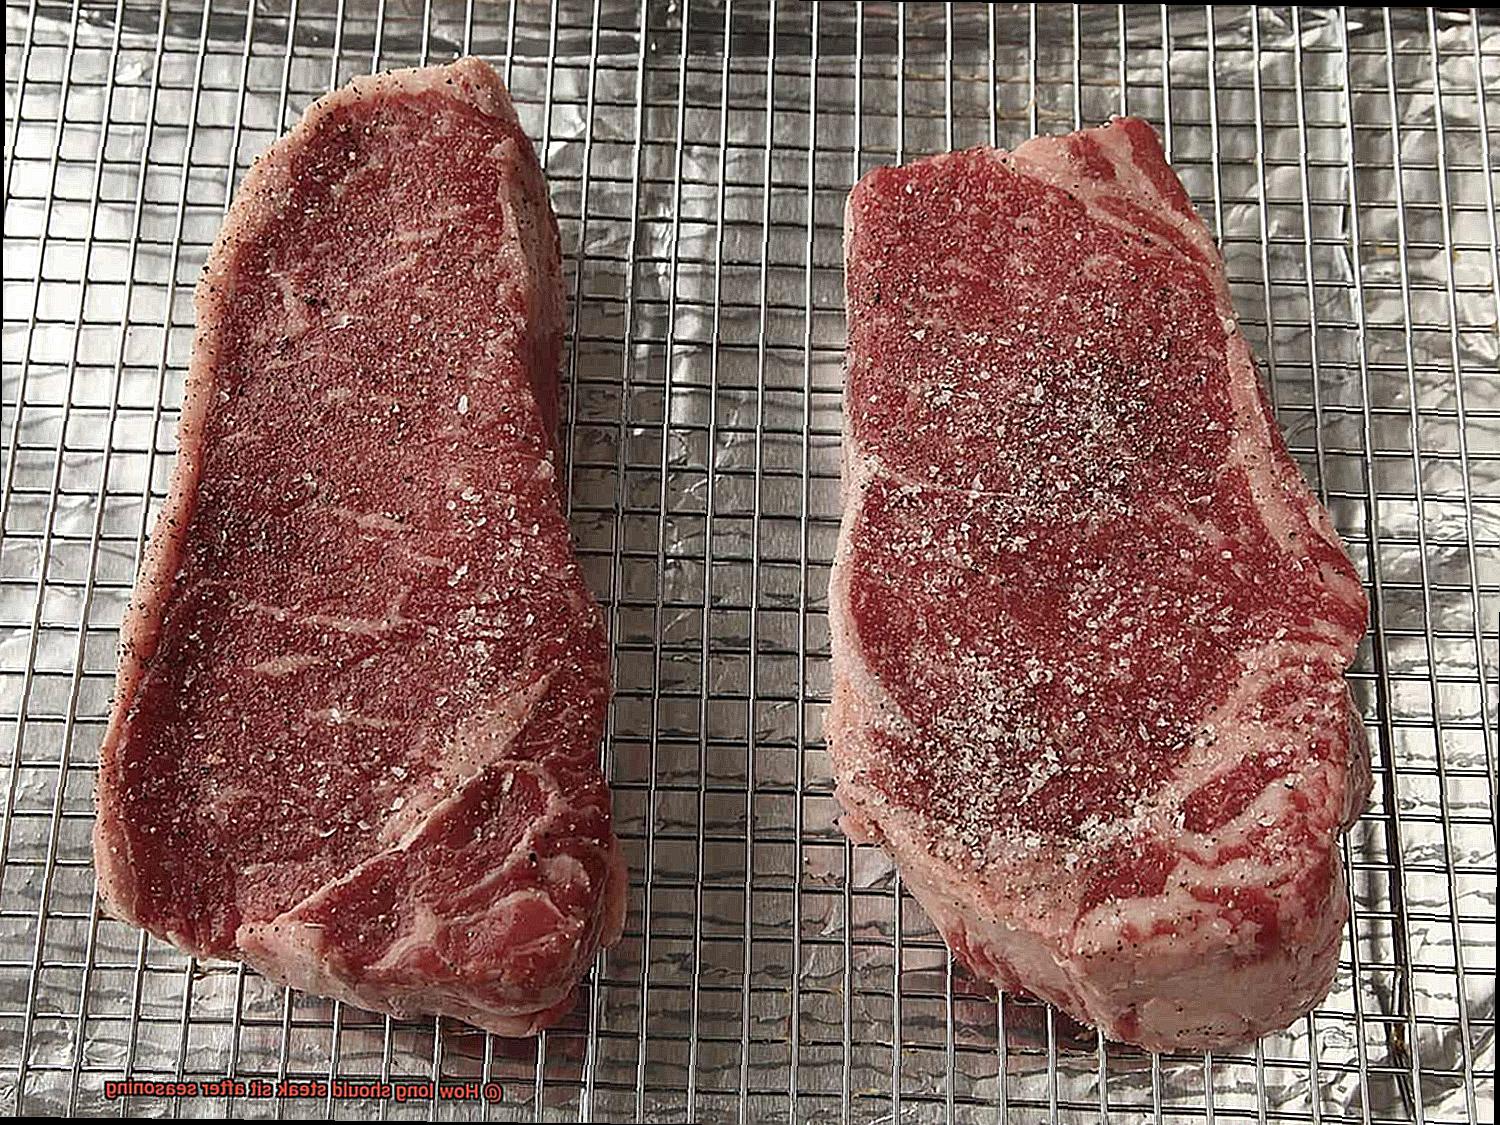 How long should steak sit after seasoning-6